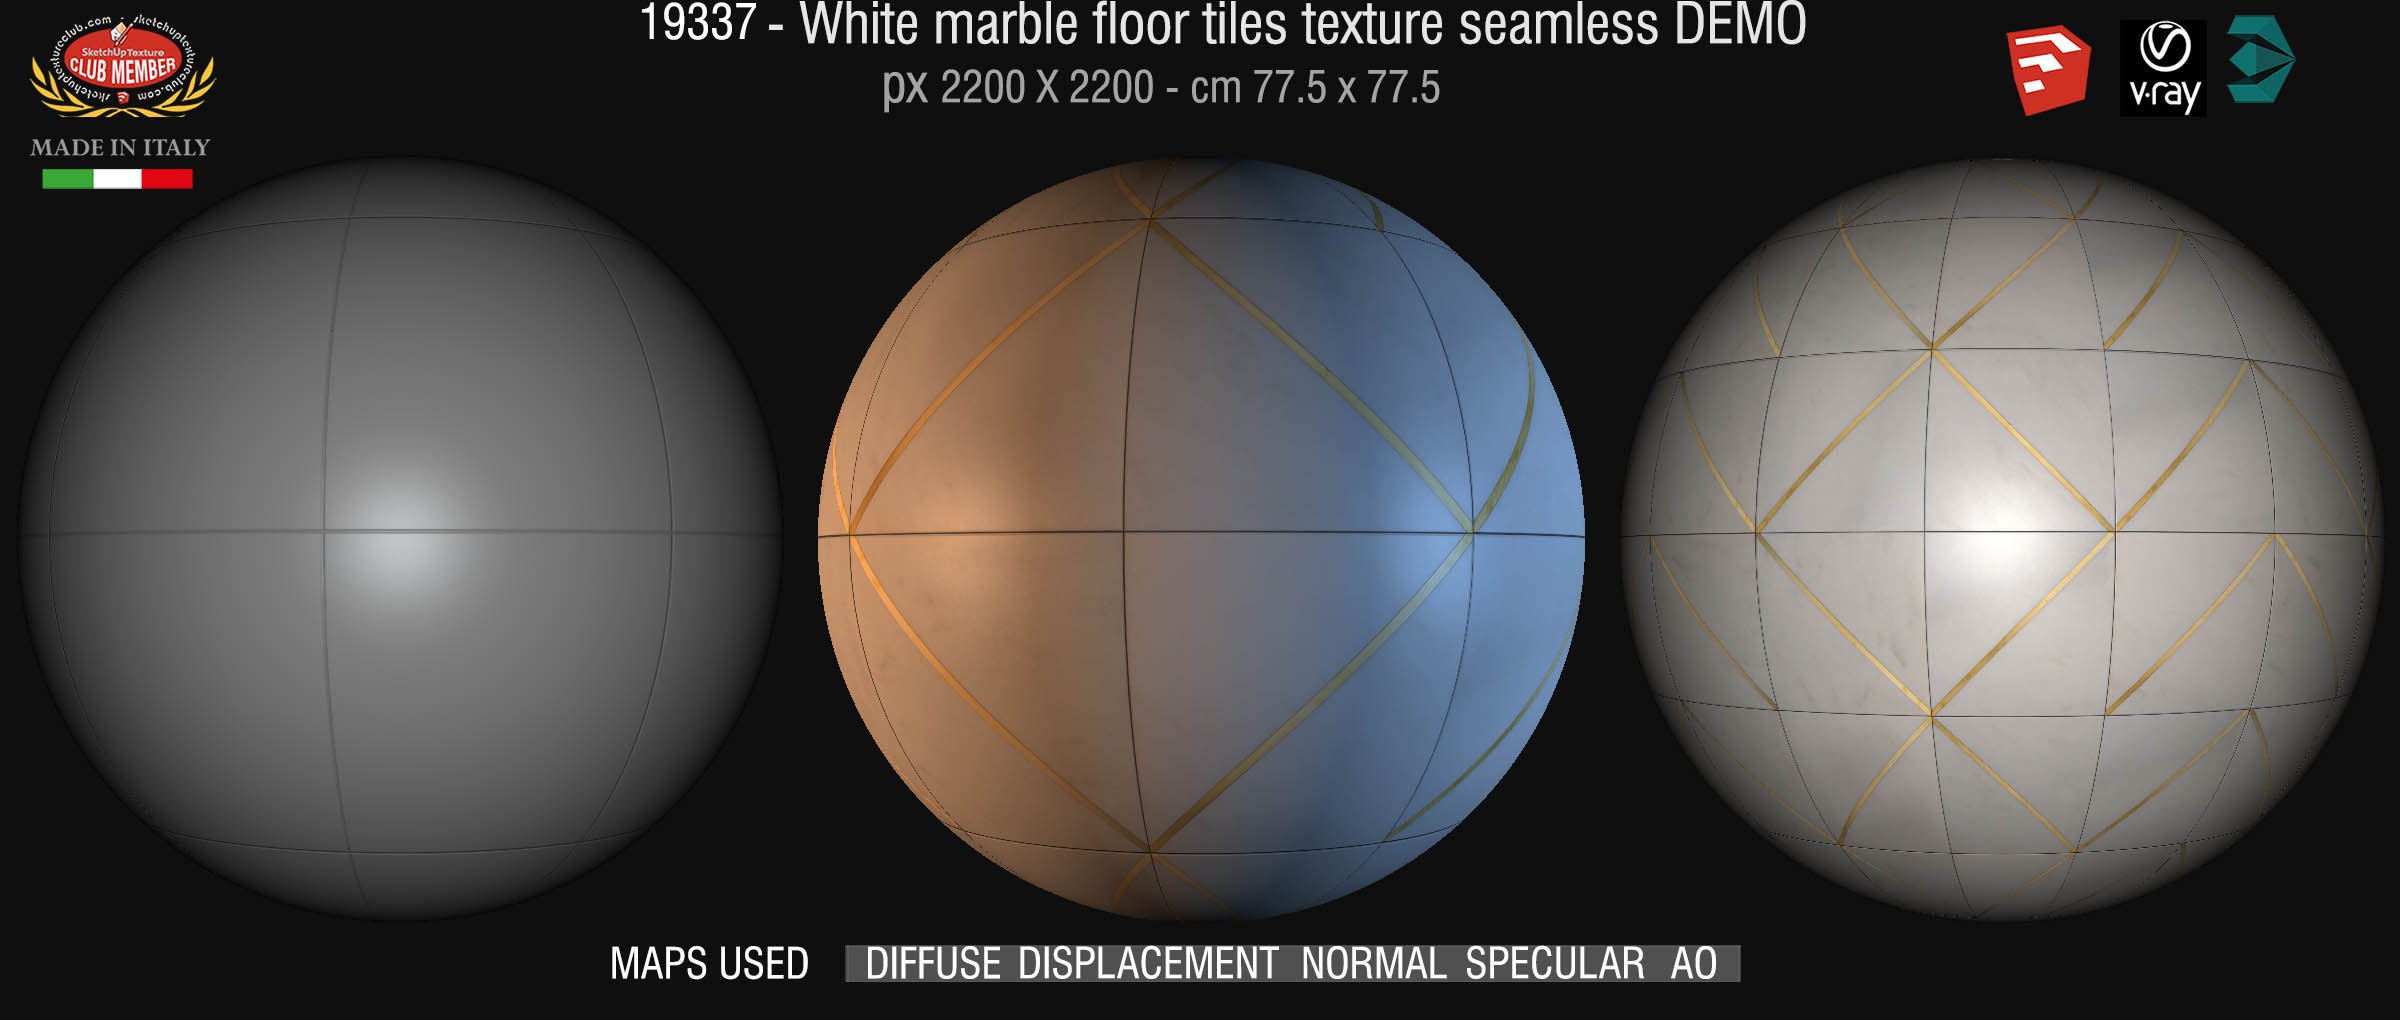 19337 Geometric pattern white marble floor tile texture seamless + maps DEMO